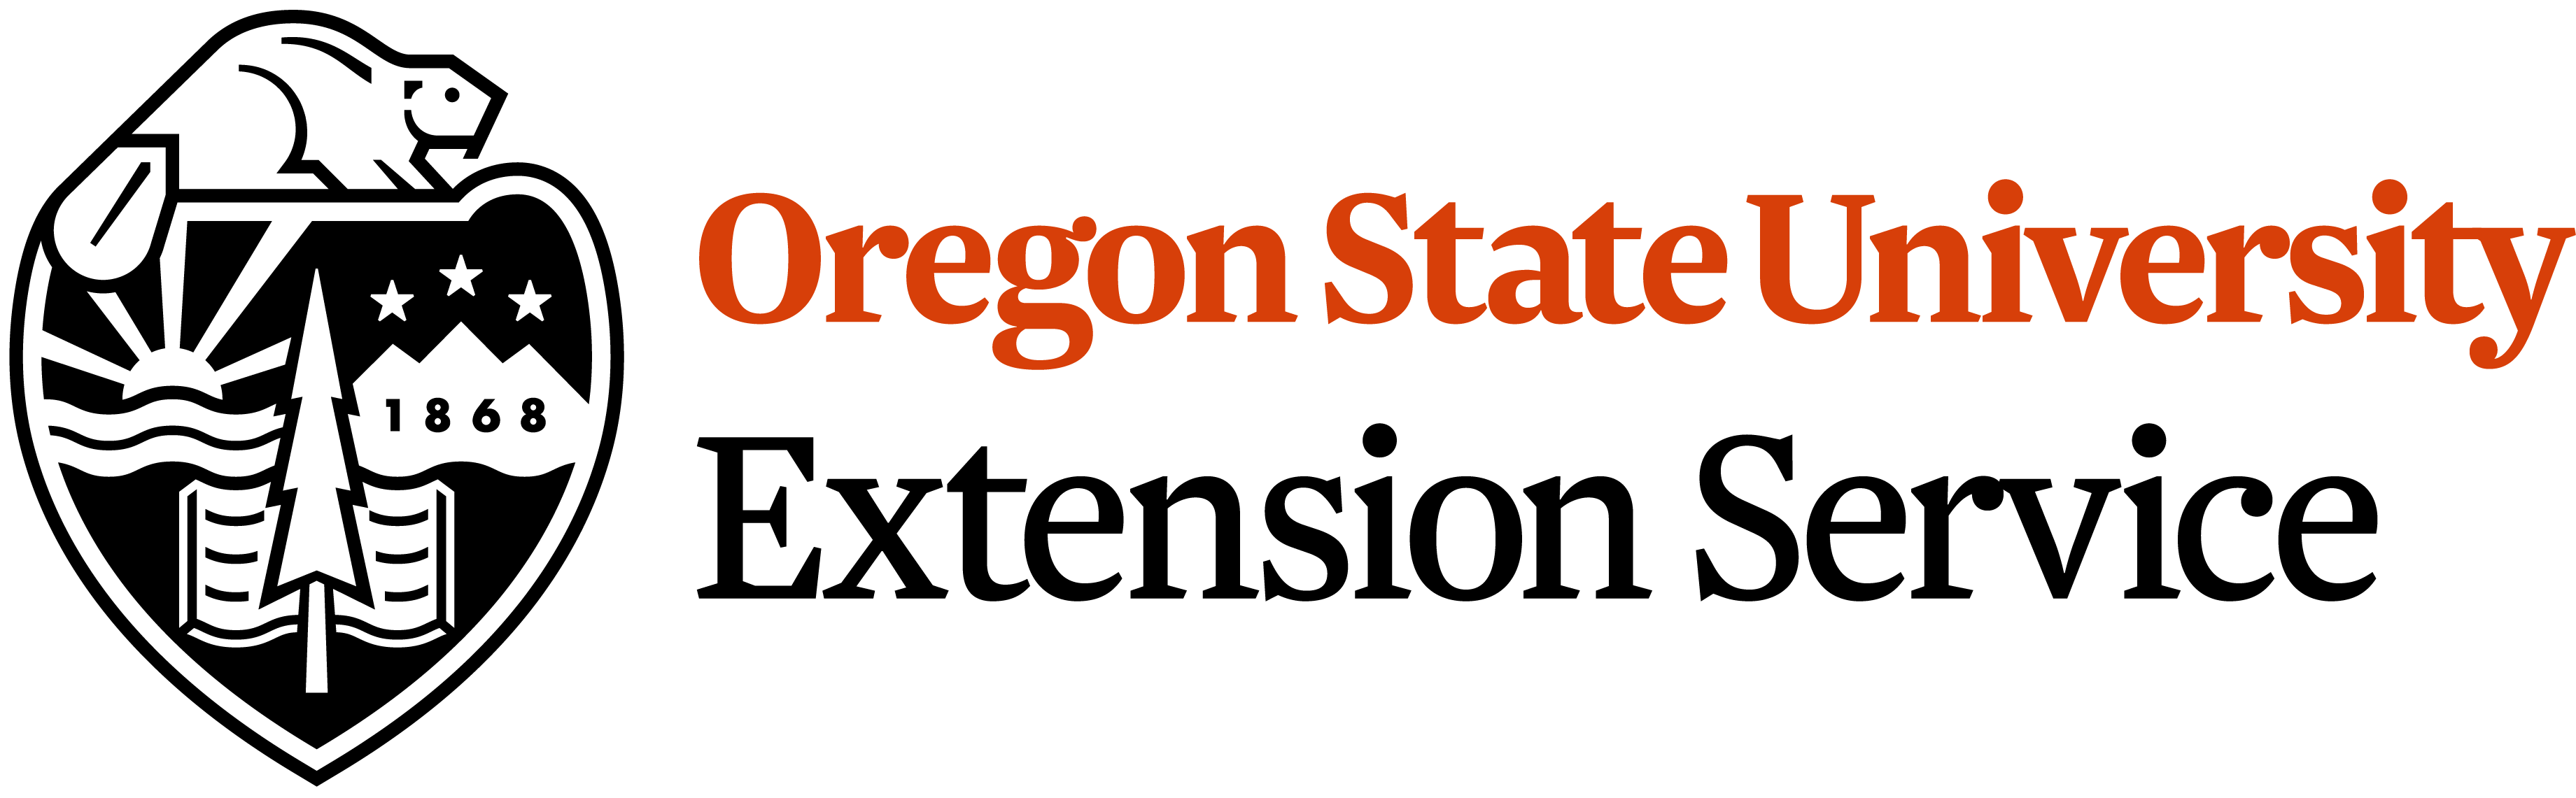 Oregon State University Seeks Manager of Continuing & Professional Education Program